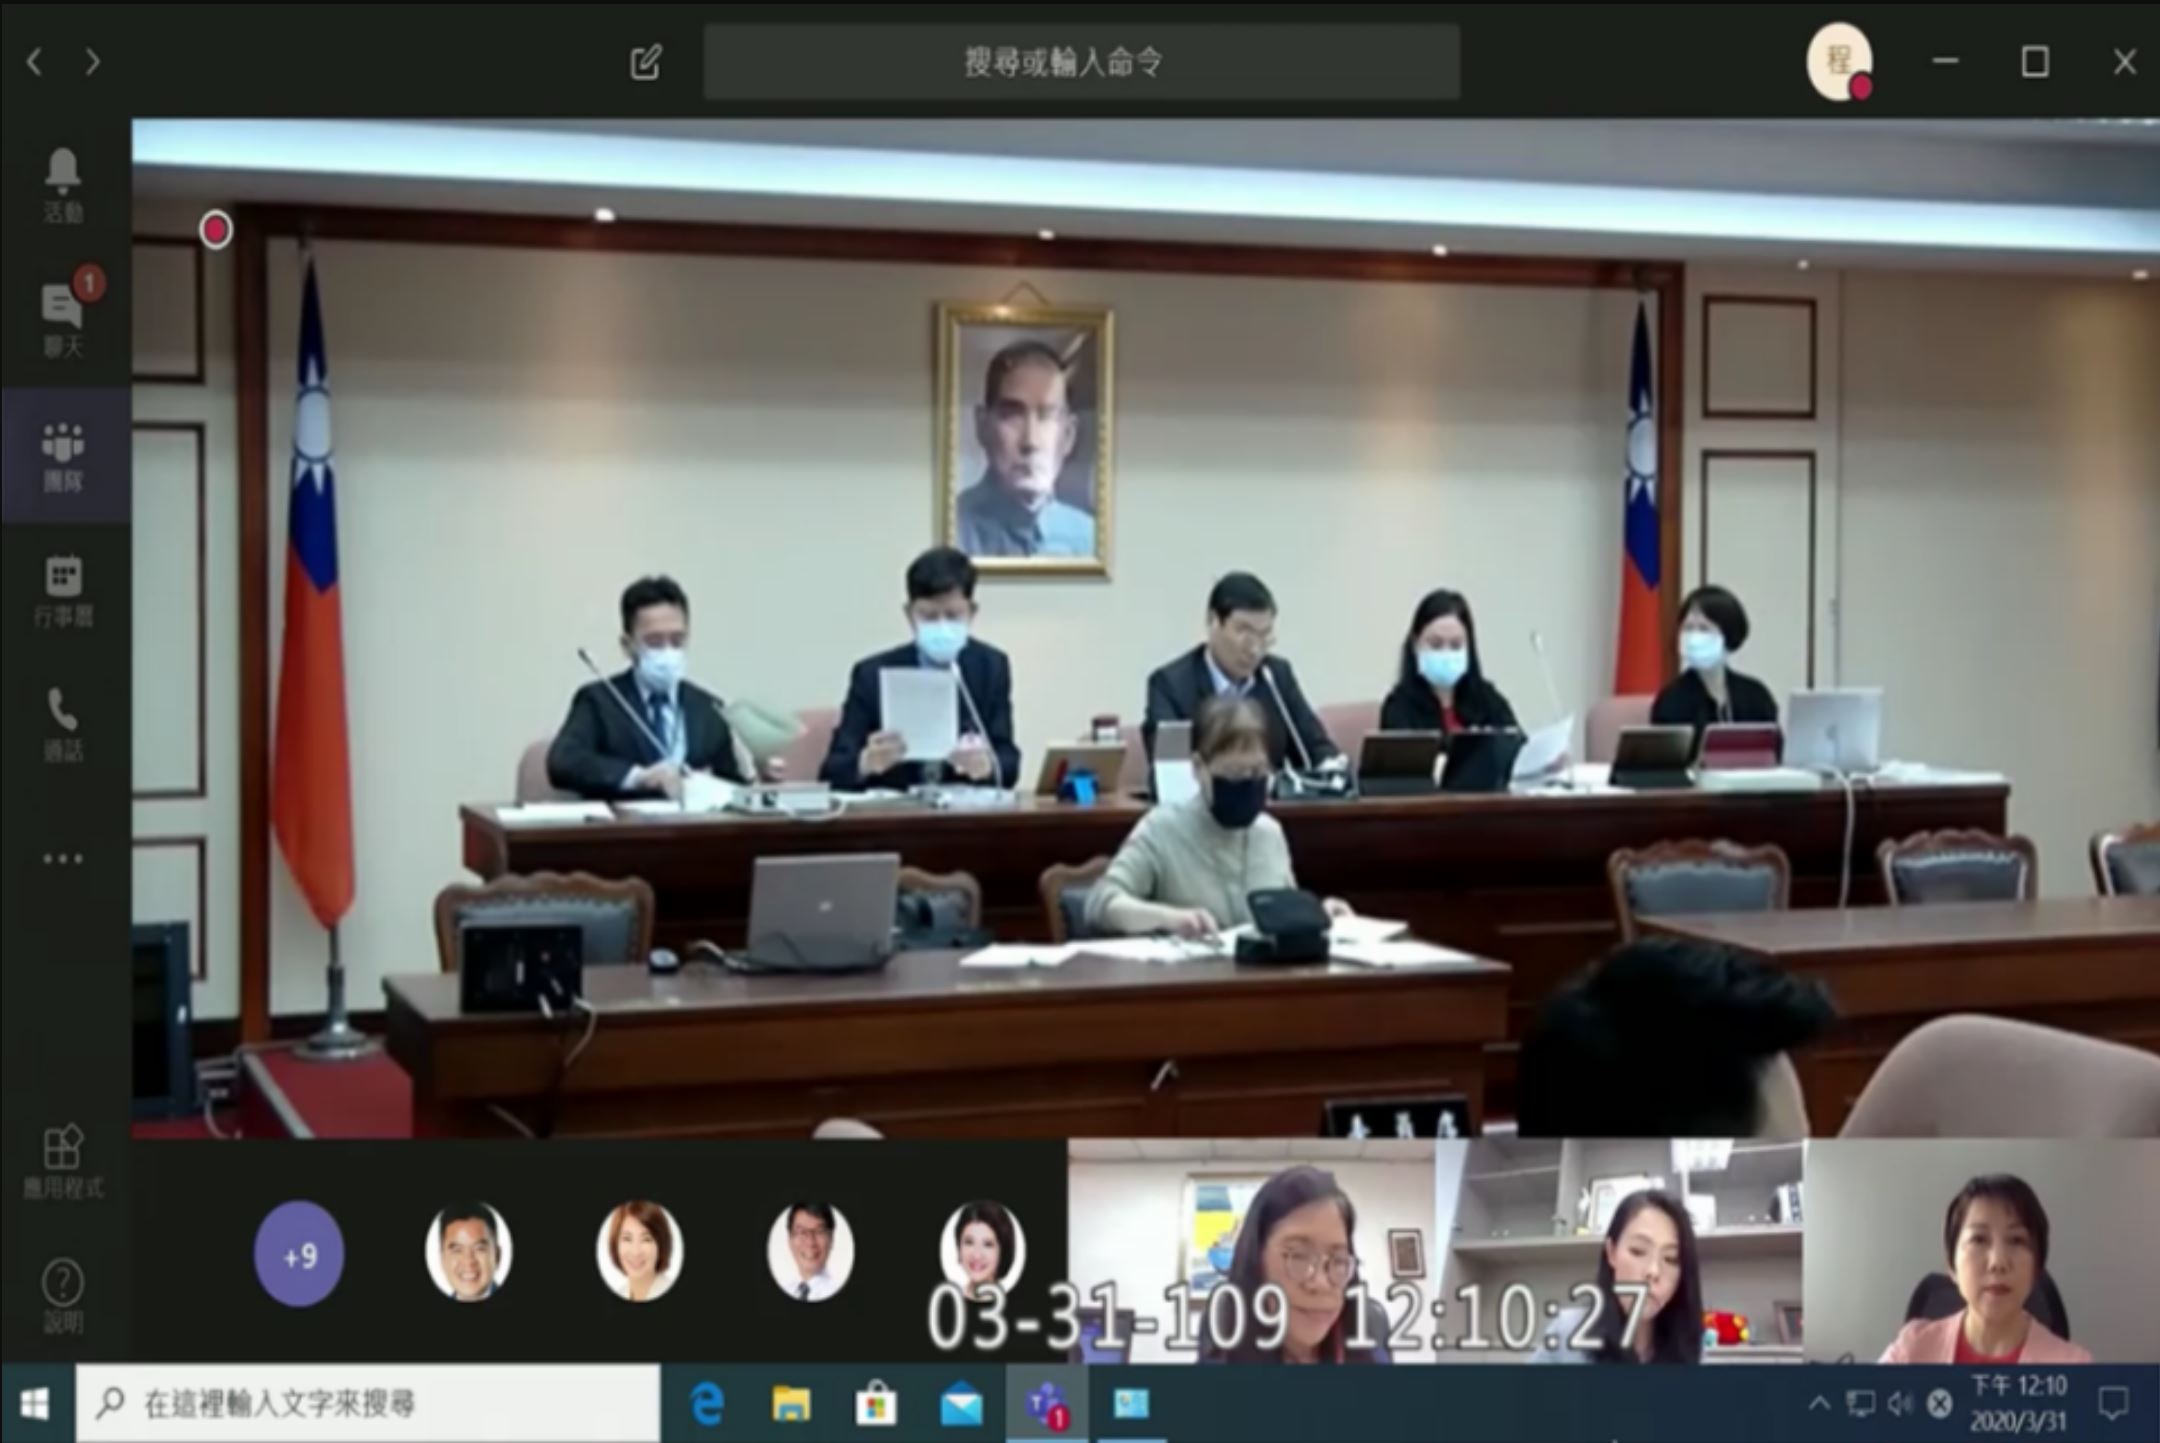 Microsoft Teams Taiwan Parliment